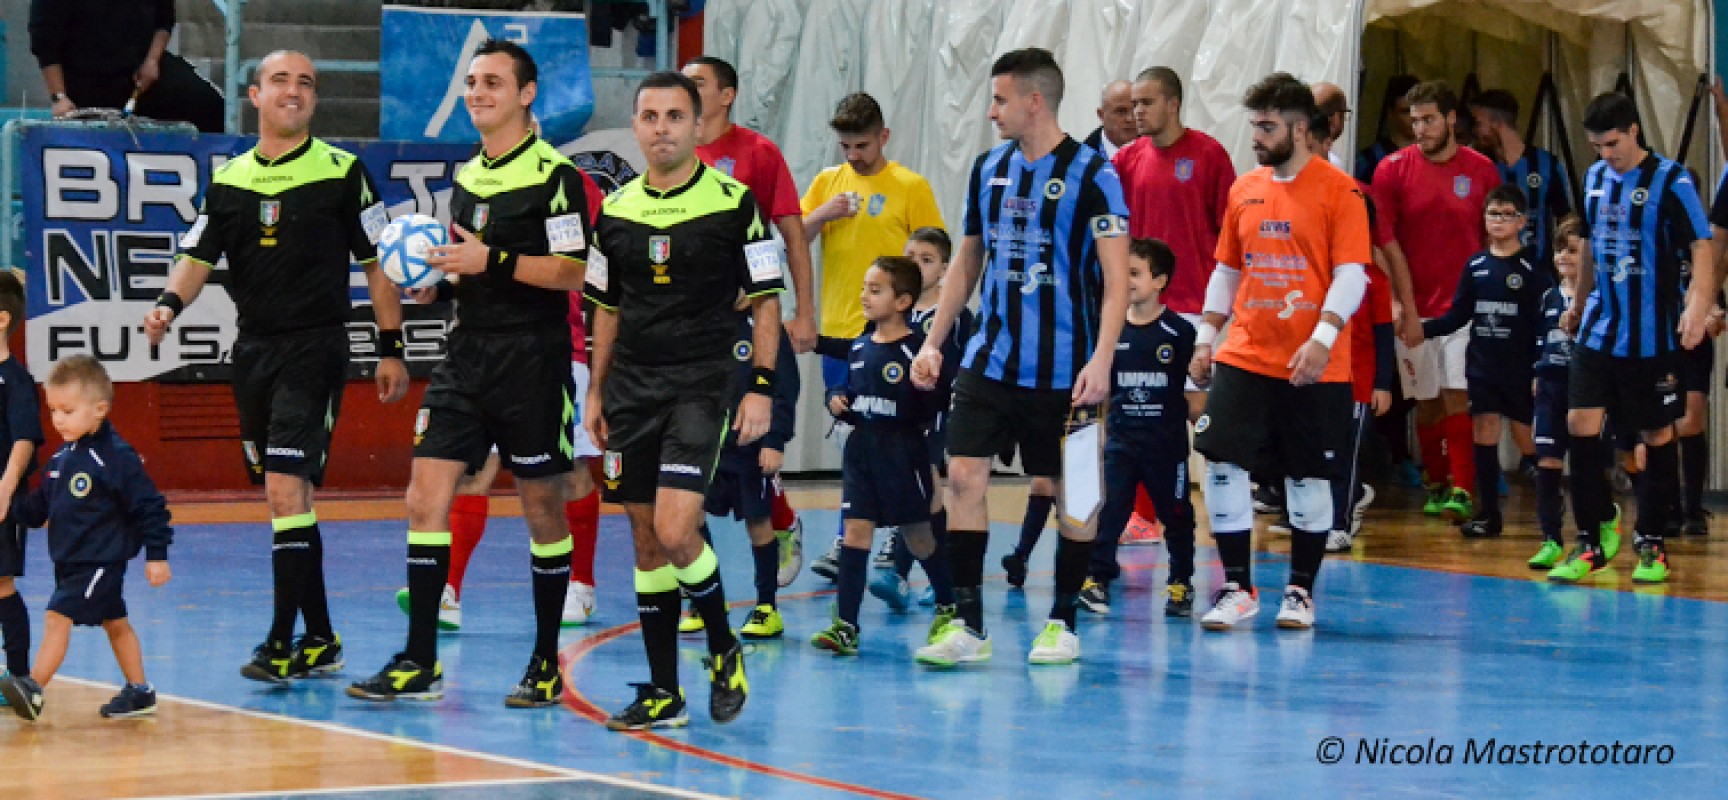 FINALE: Golden Eagle Partenope – Futsal Bisceglie 1-5